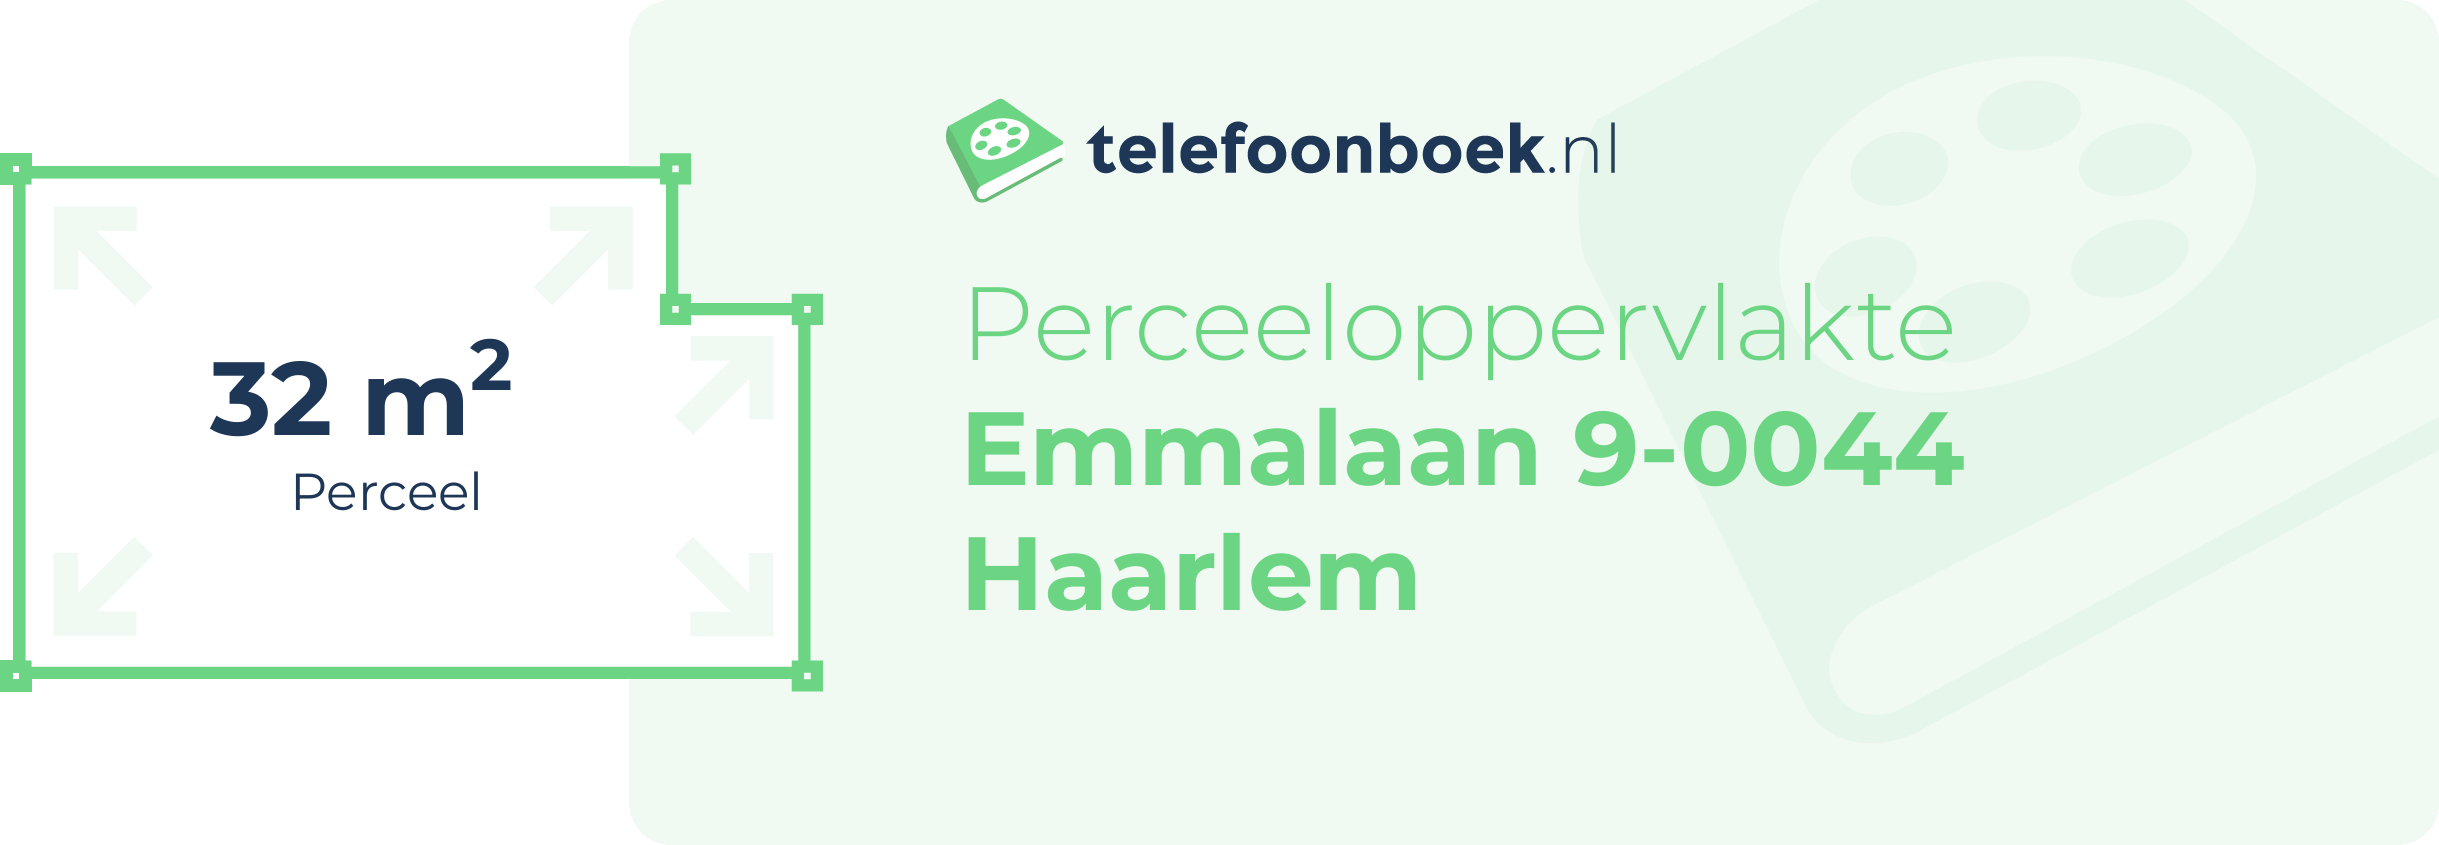 Perceeloppervlakte Emmalaan 9-0044 Haarlem